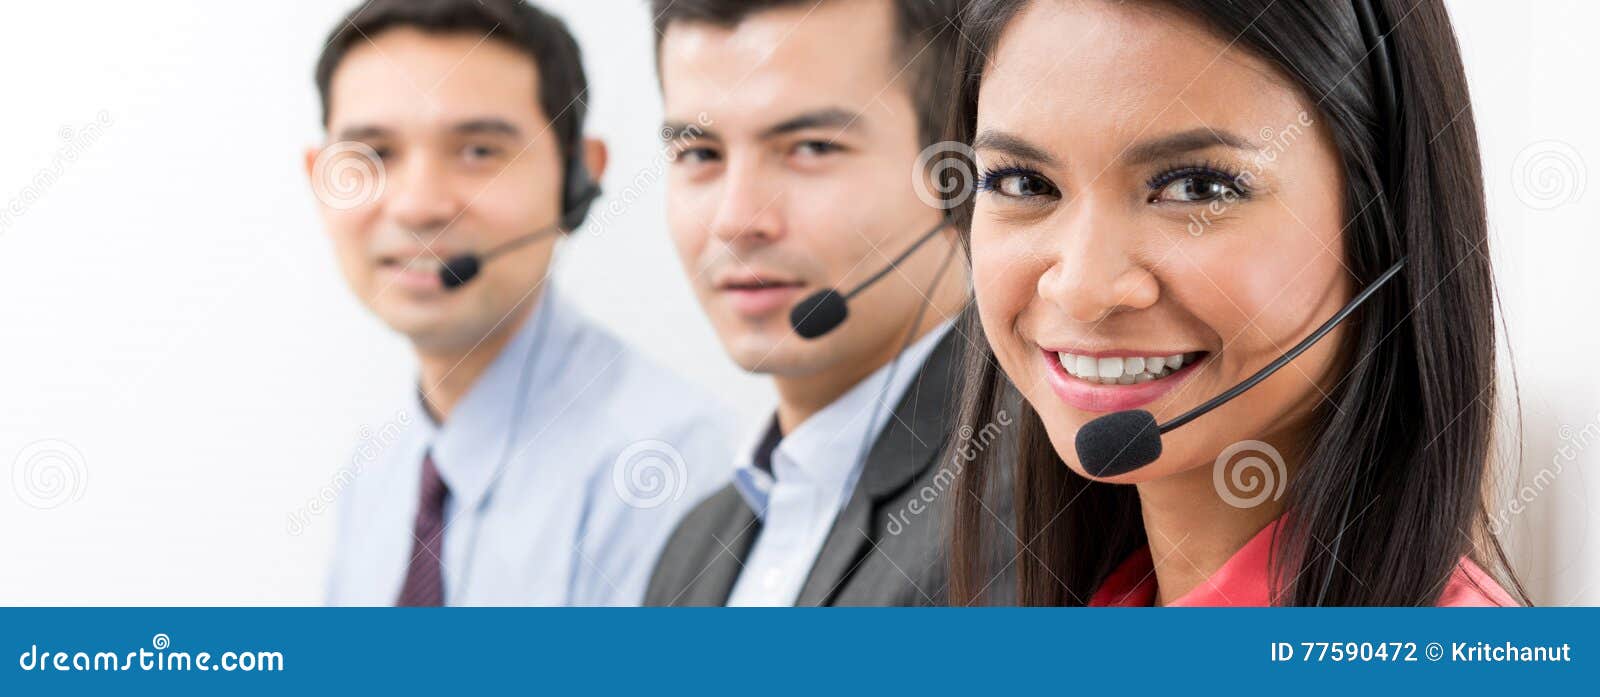 call center telemarketing or customer service team